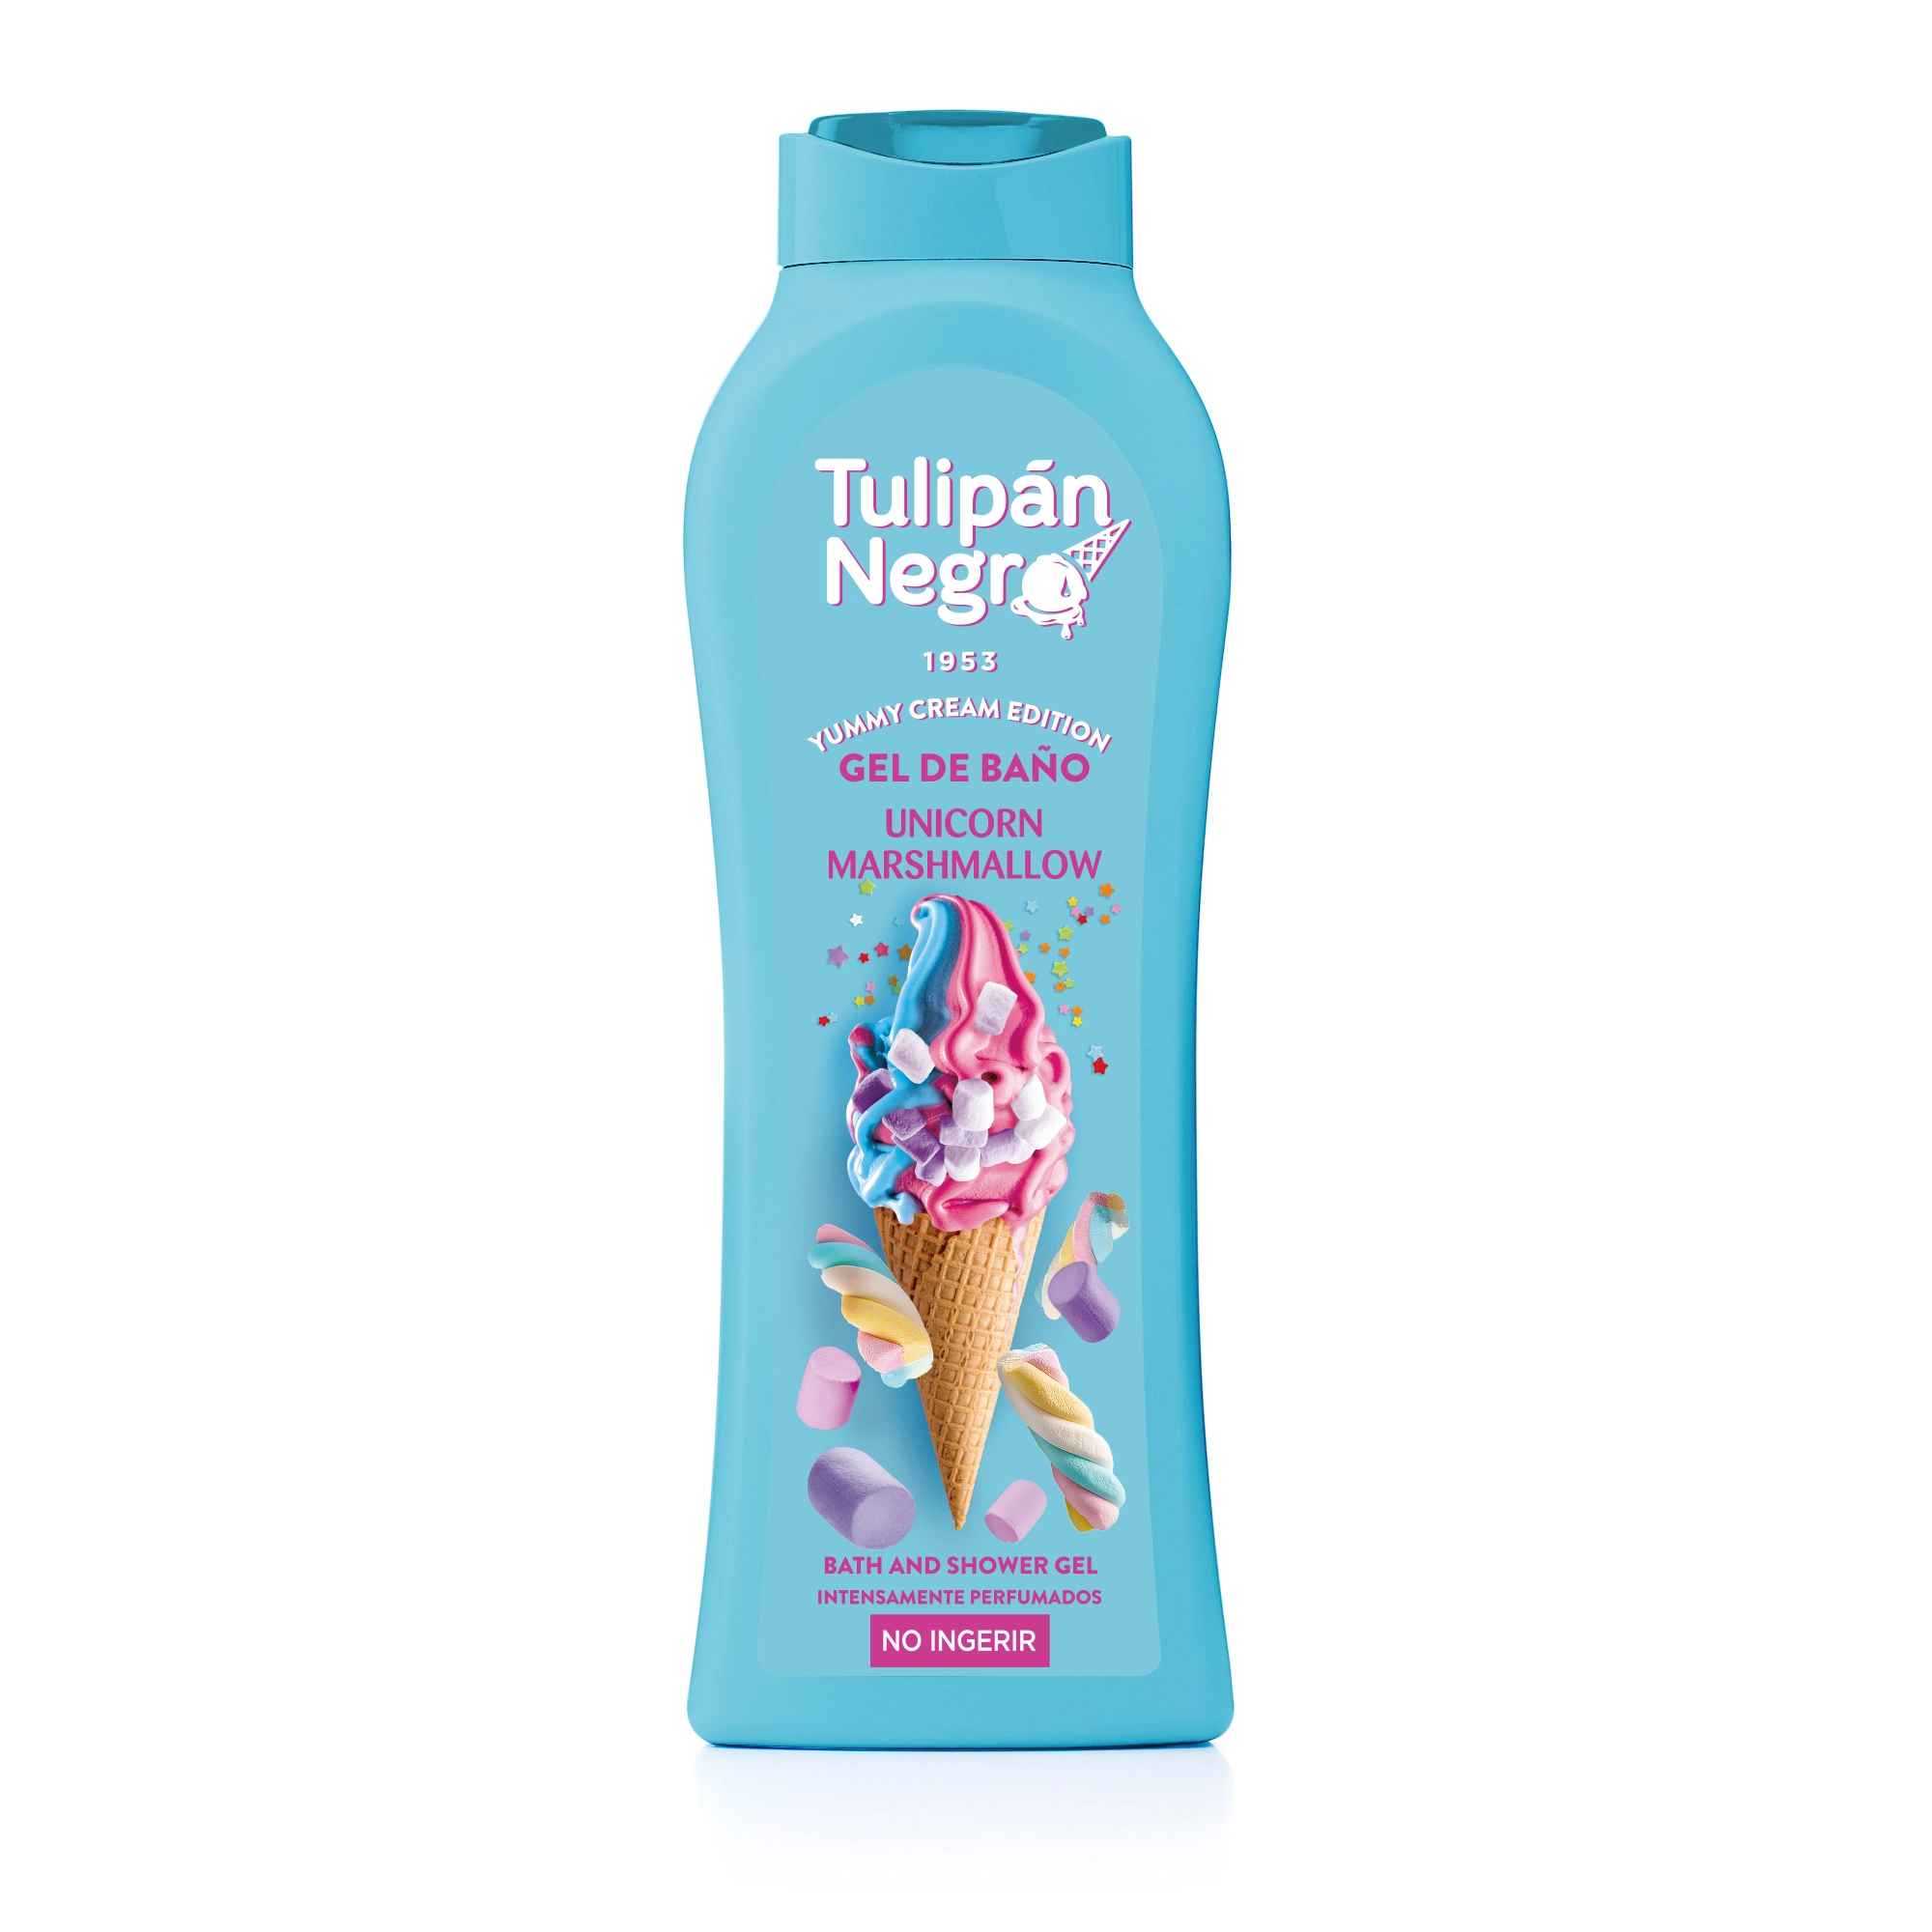 Гель для душа "Зефирный единорог" - Tulipan Negro Yummy Cream Edition Bath And Shower Gel Marshmallow Unicorn, 650 мл - фото N2